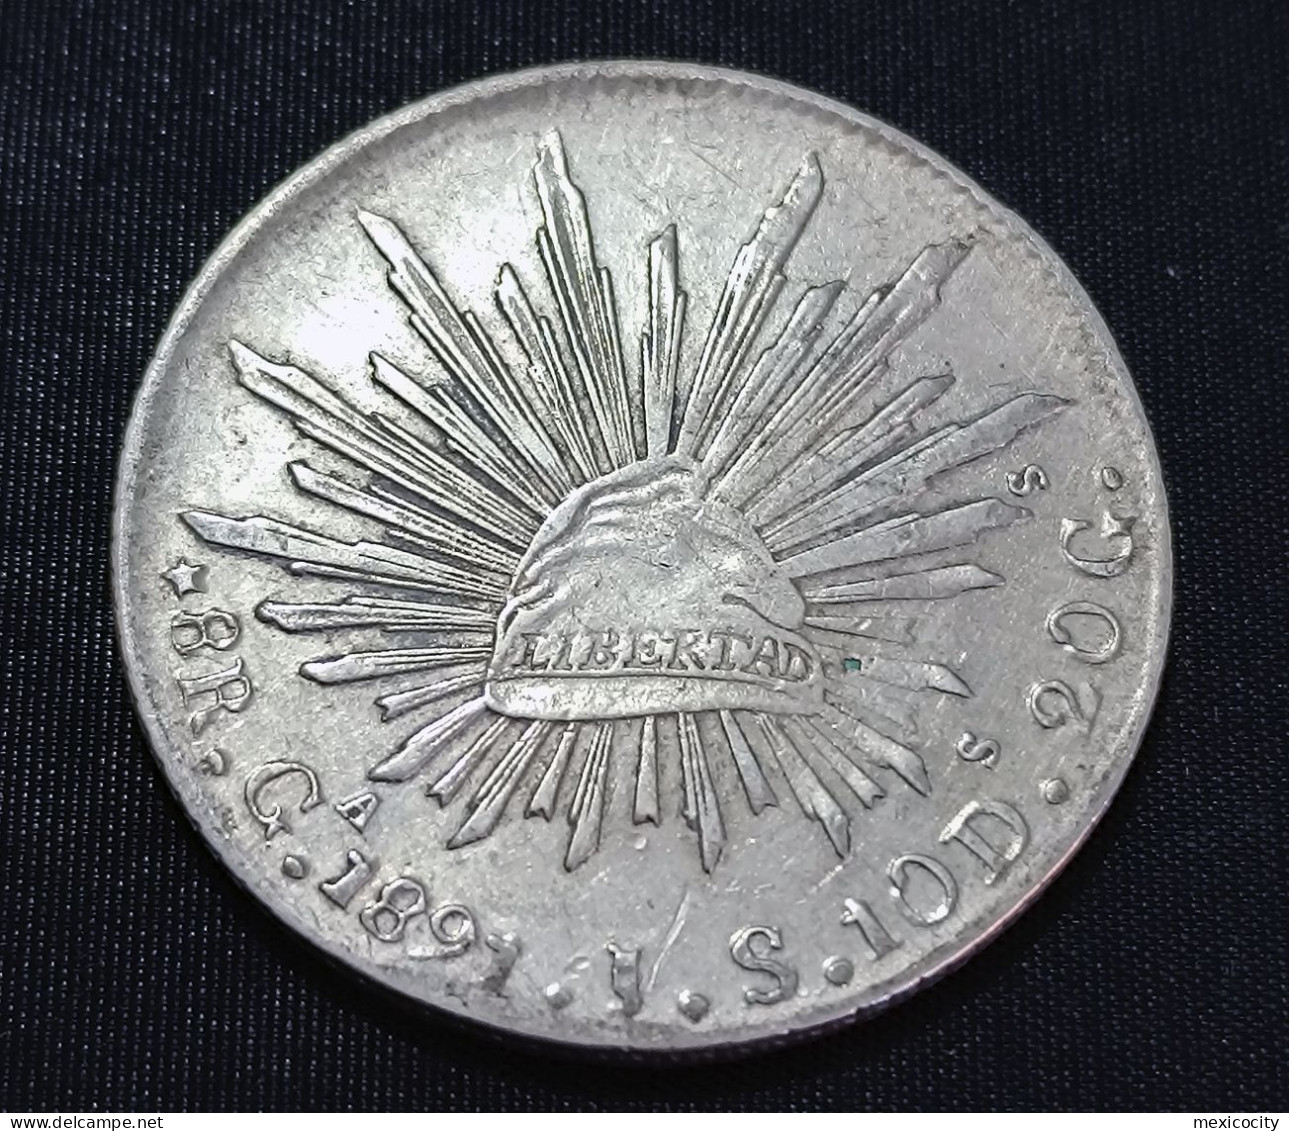 MEXICO 1891 8 REALES Silver Coin, Guadalajara Mint JS - See Imgs., Nice, Scarce - Mexico